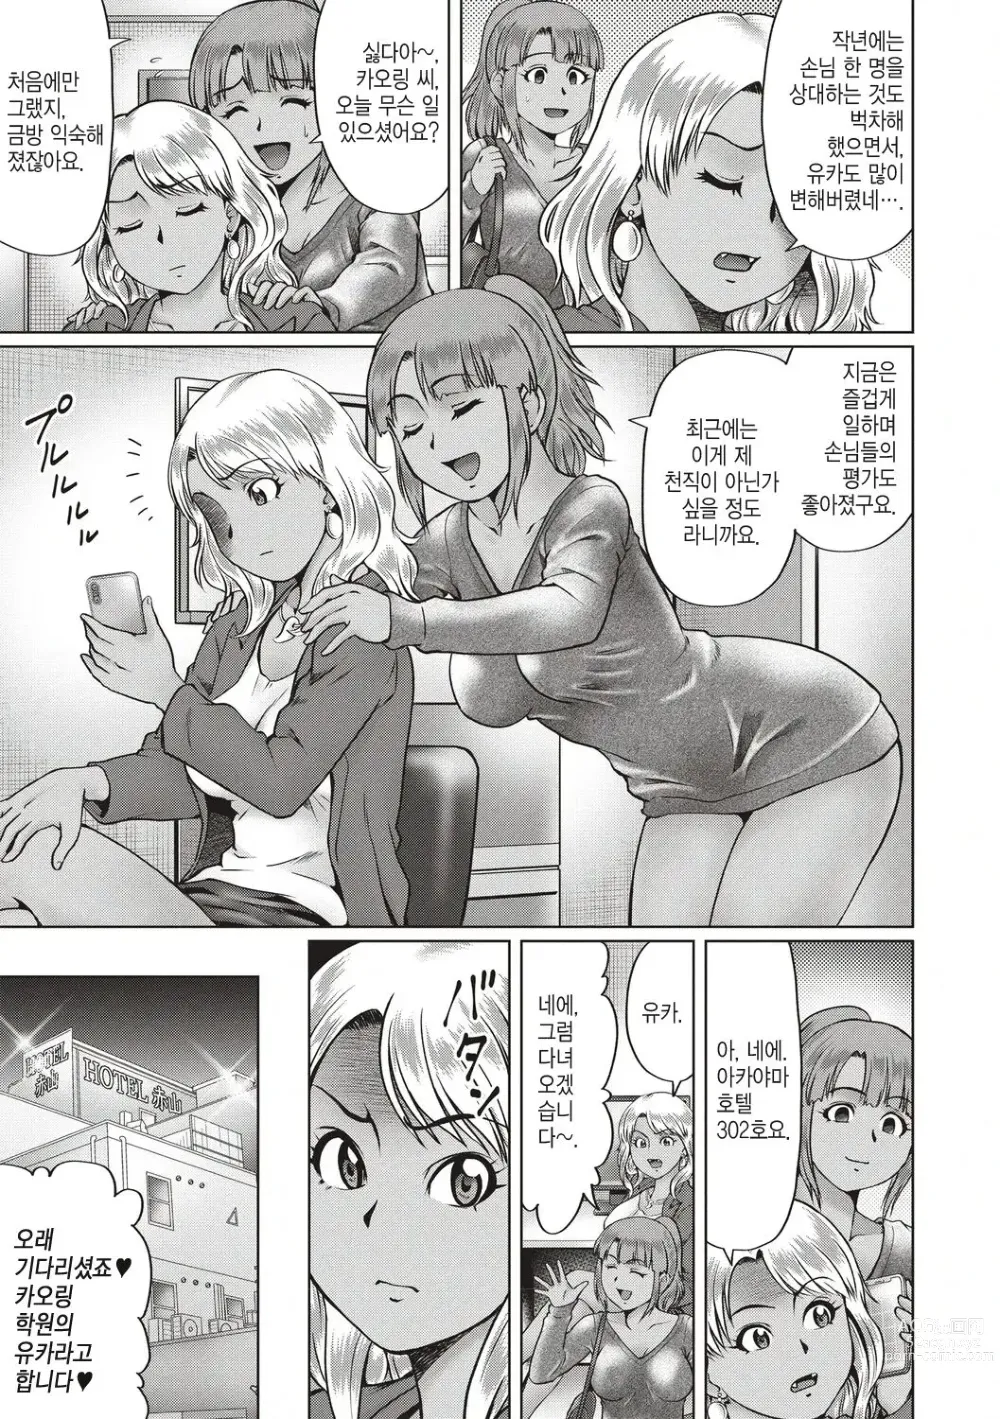 Page 3 of manga 기나긴 밤... -후편-